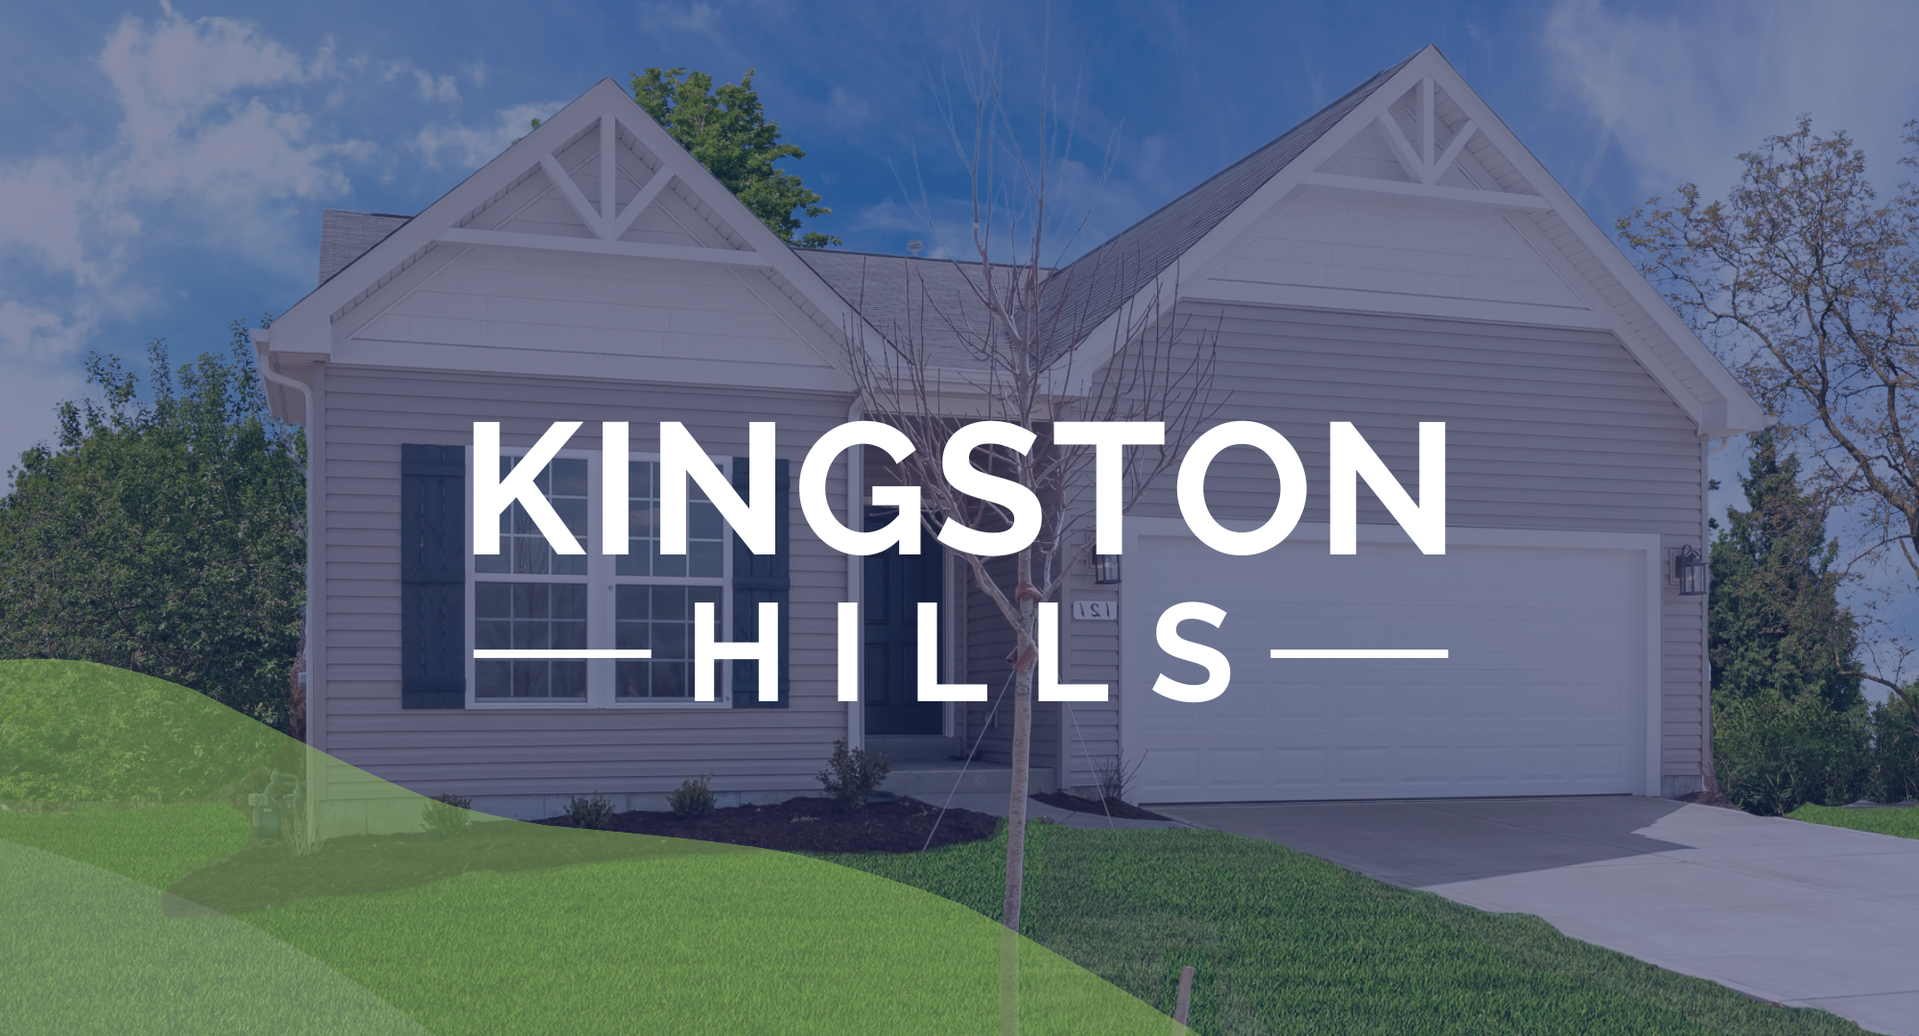 Kingston Hills - Fenton, MO New Homes. Kingston Hills New Homes in Fenton, MO